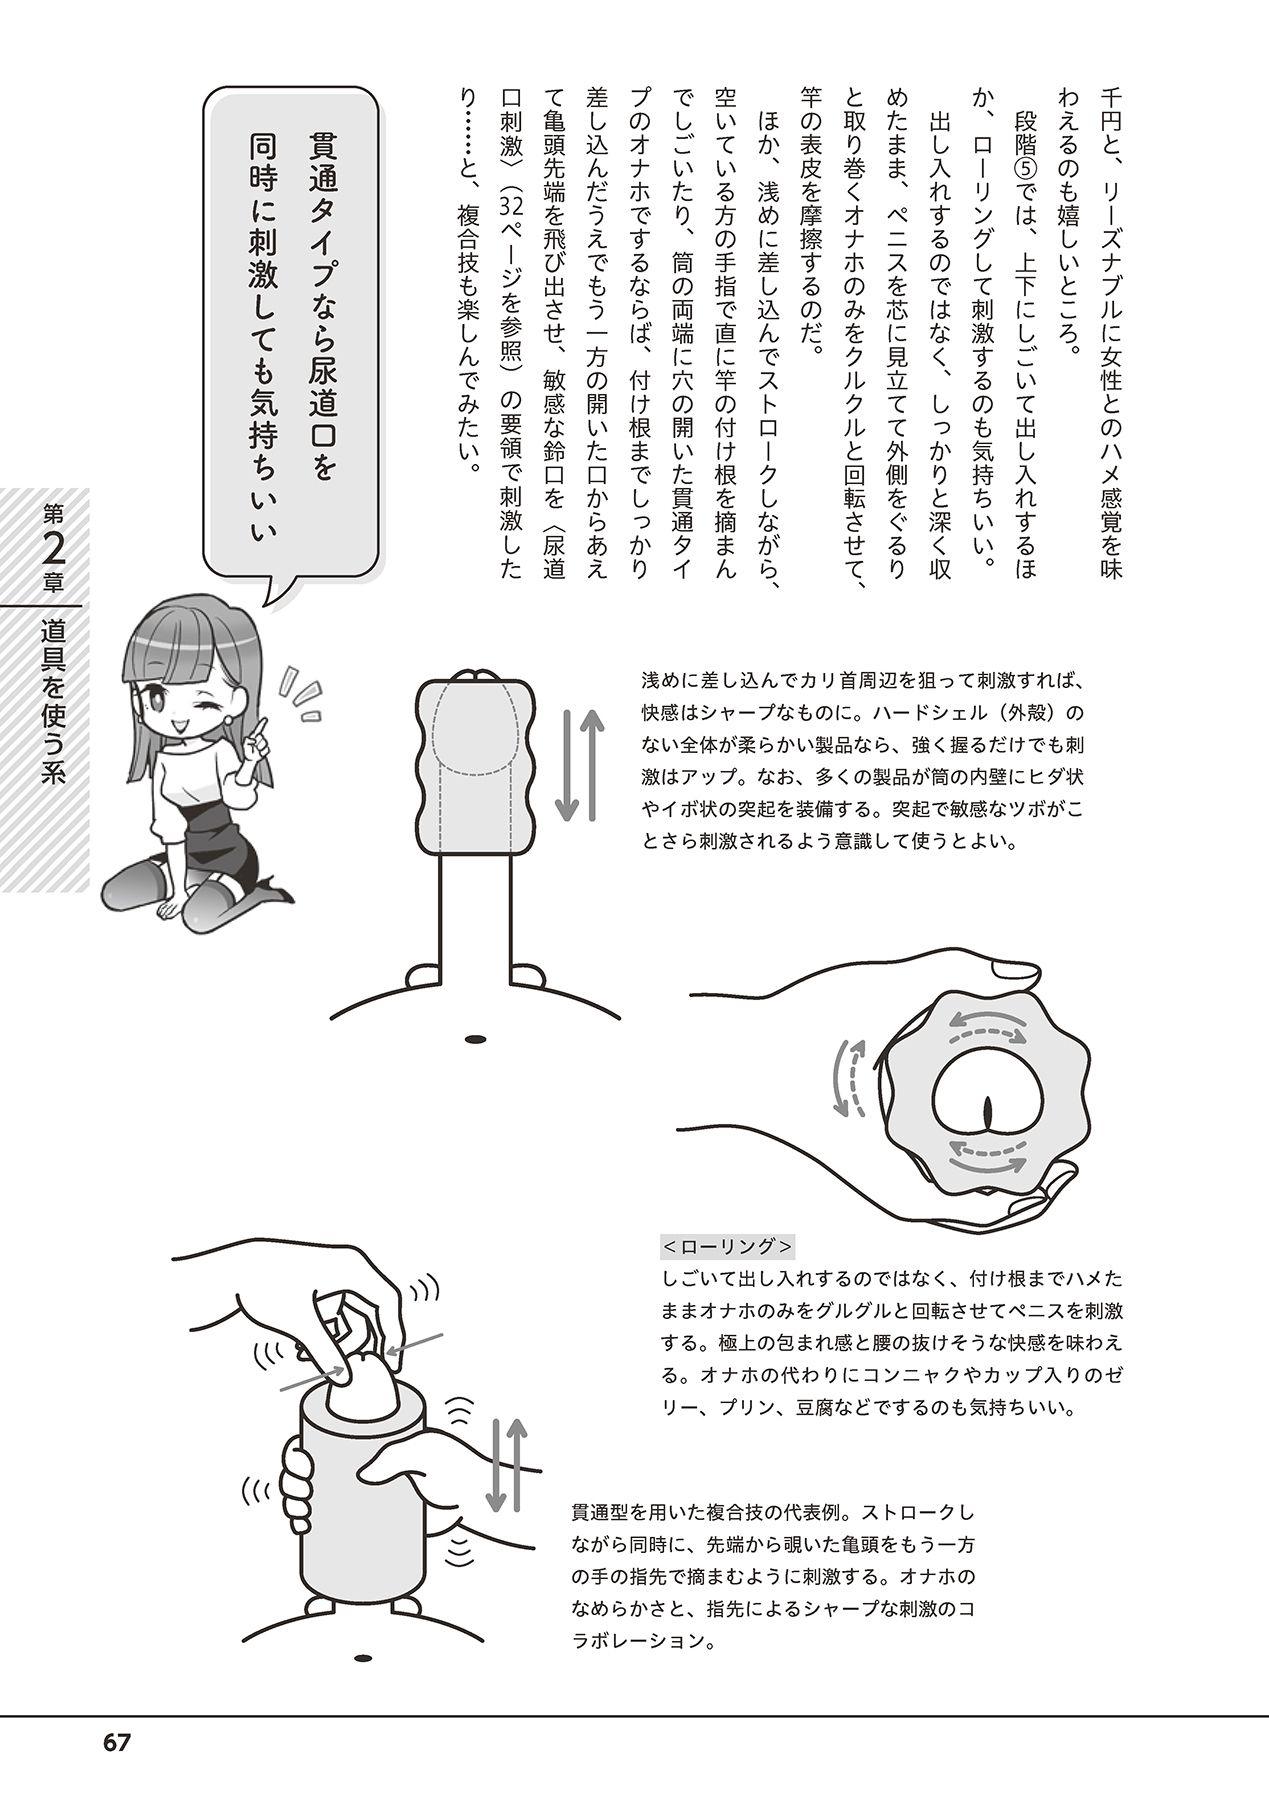 Otoko no Jii Onanie Kanzen Manual Illustration Han...... Onanie Play 68